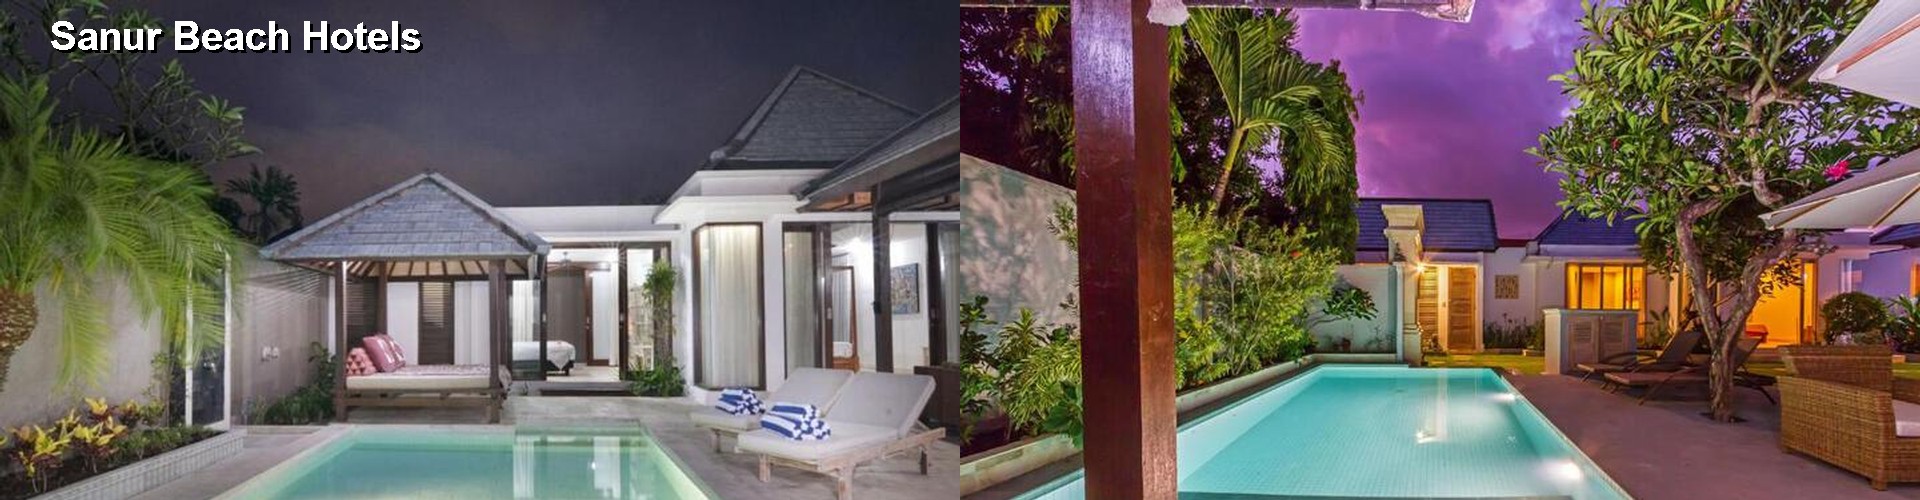 5 Best Hotels near Sanur Beach